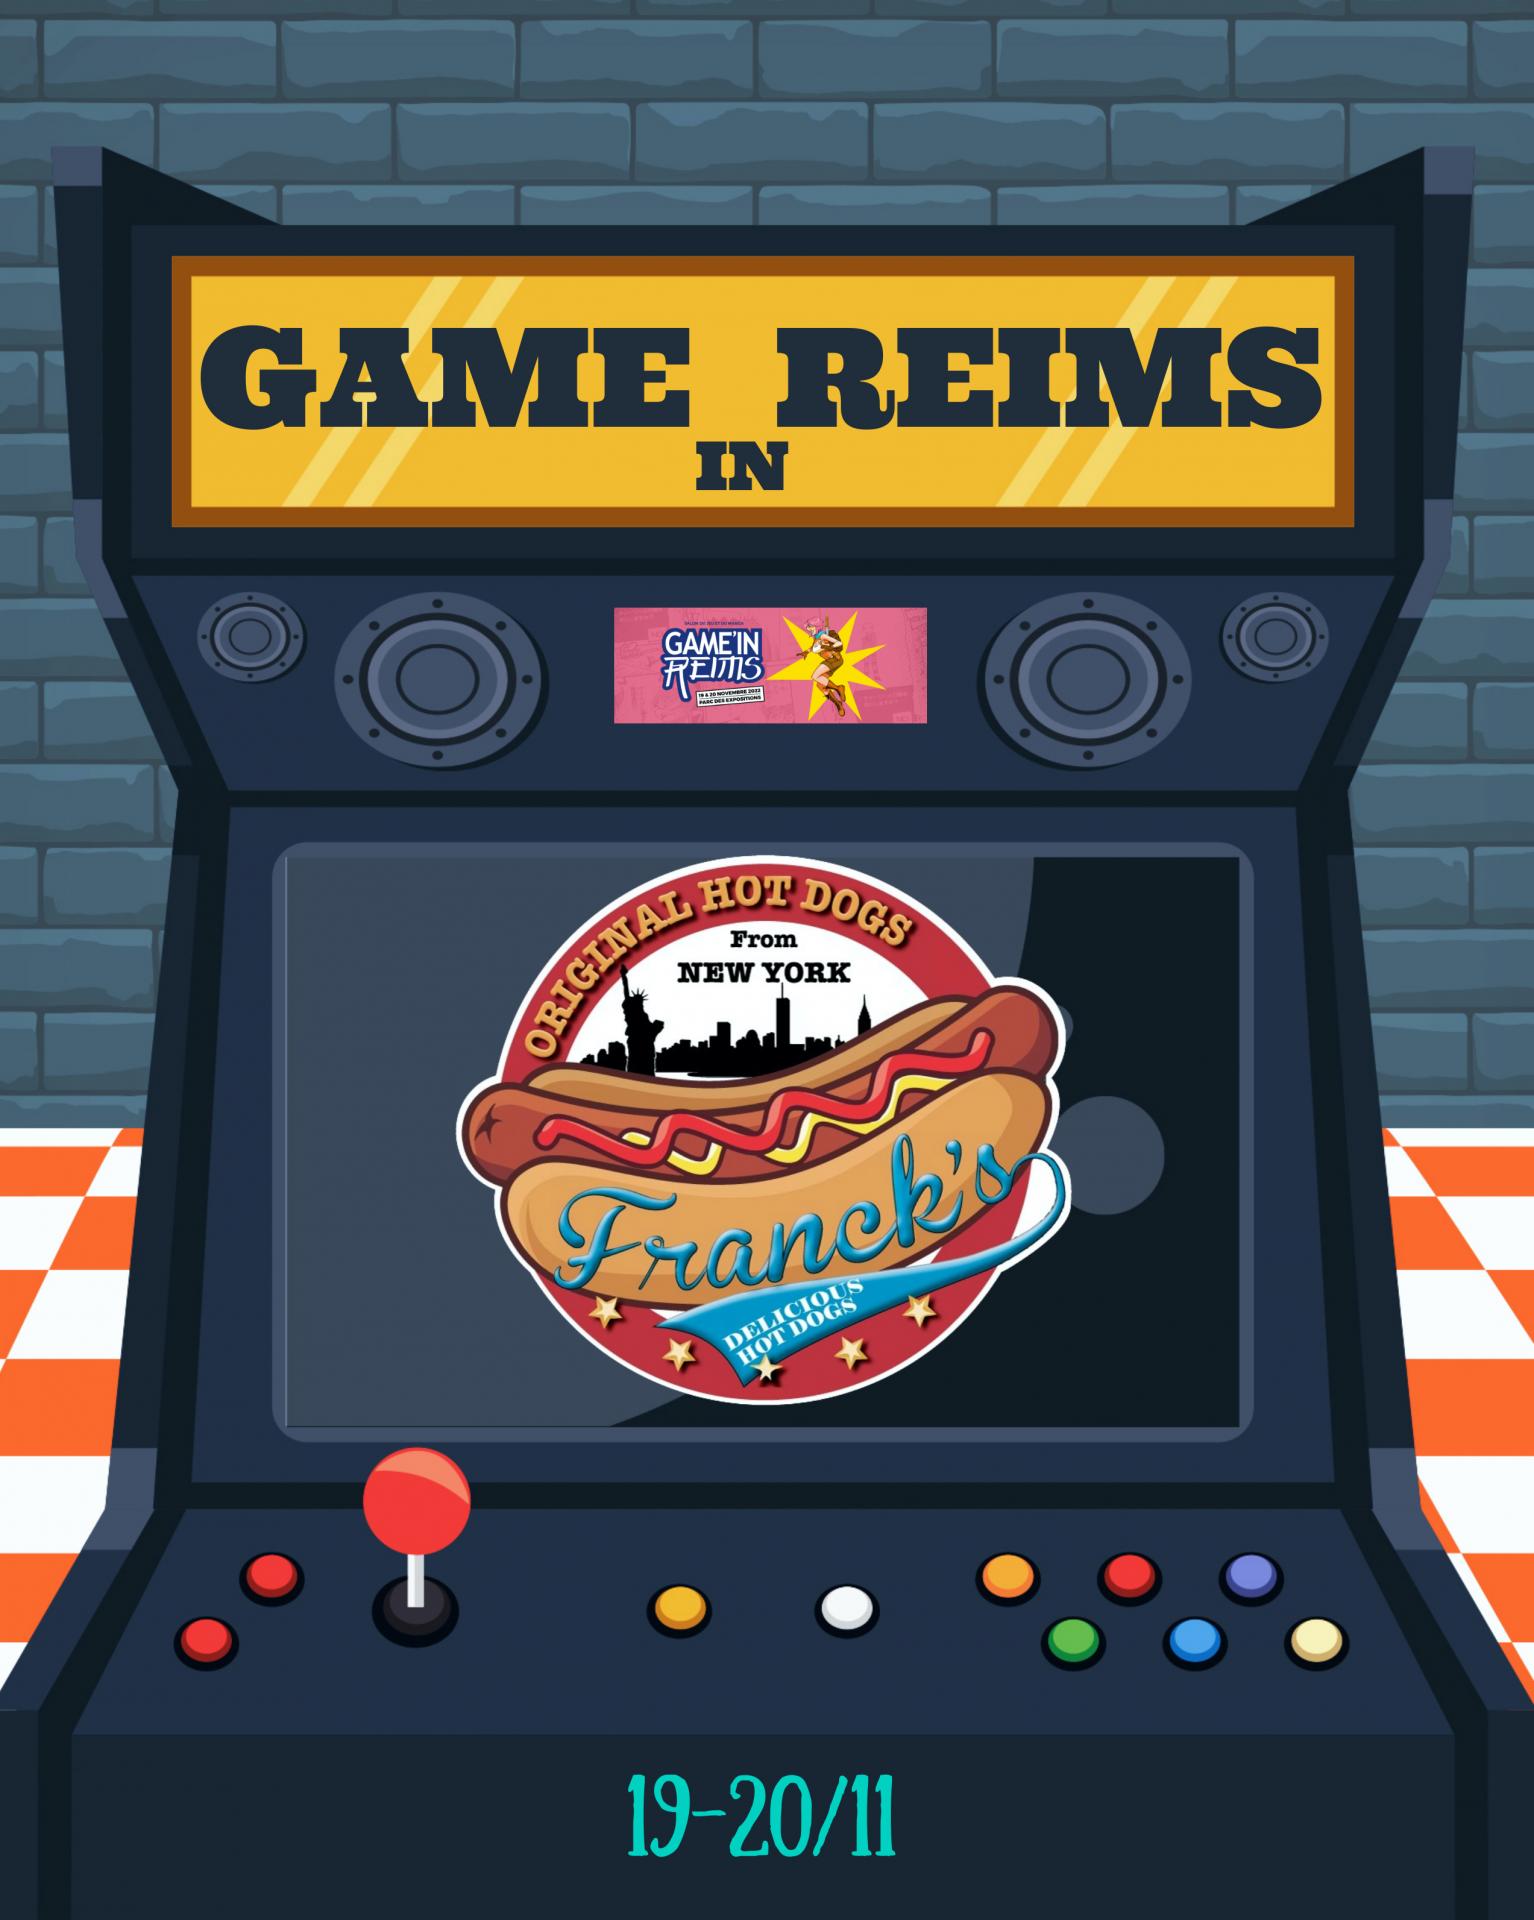 Arcade game in reims